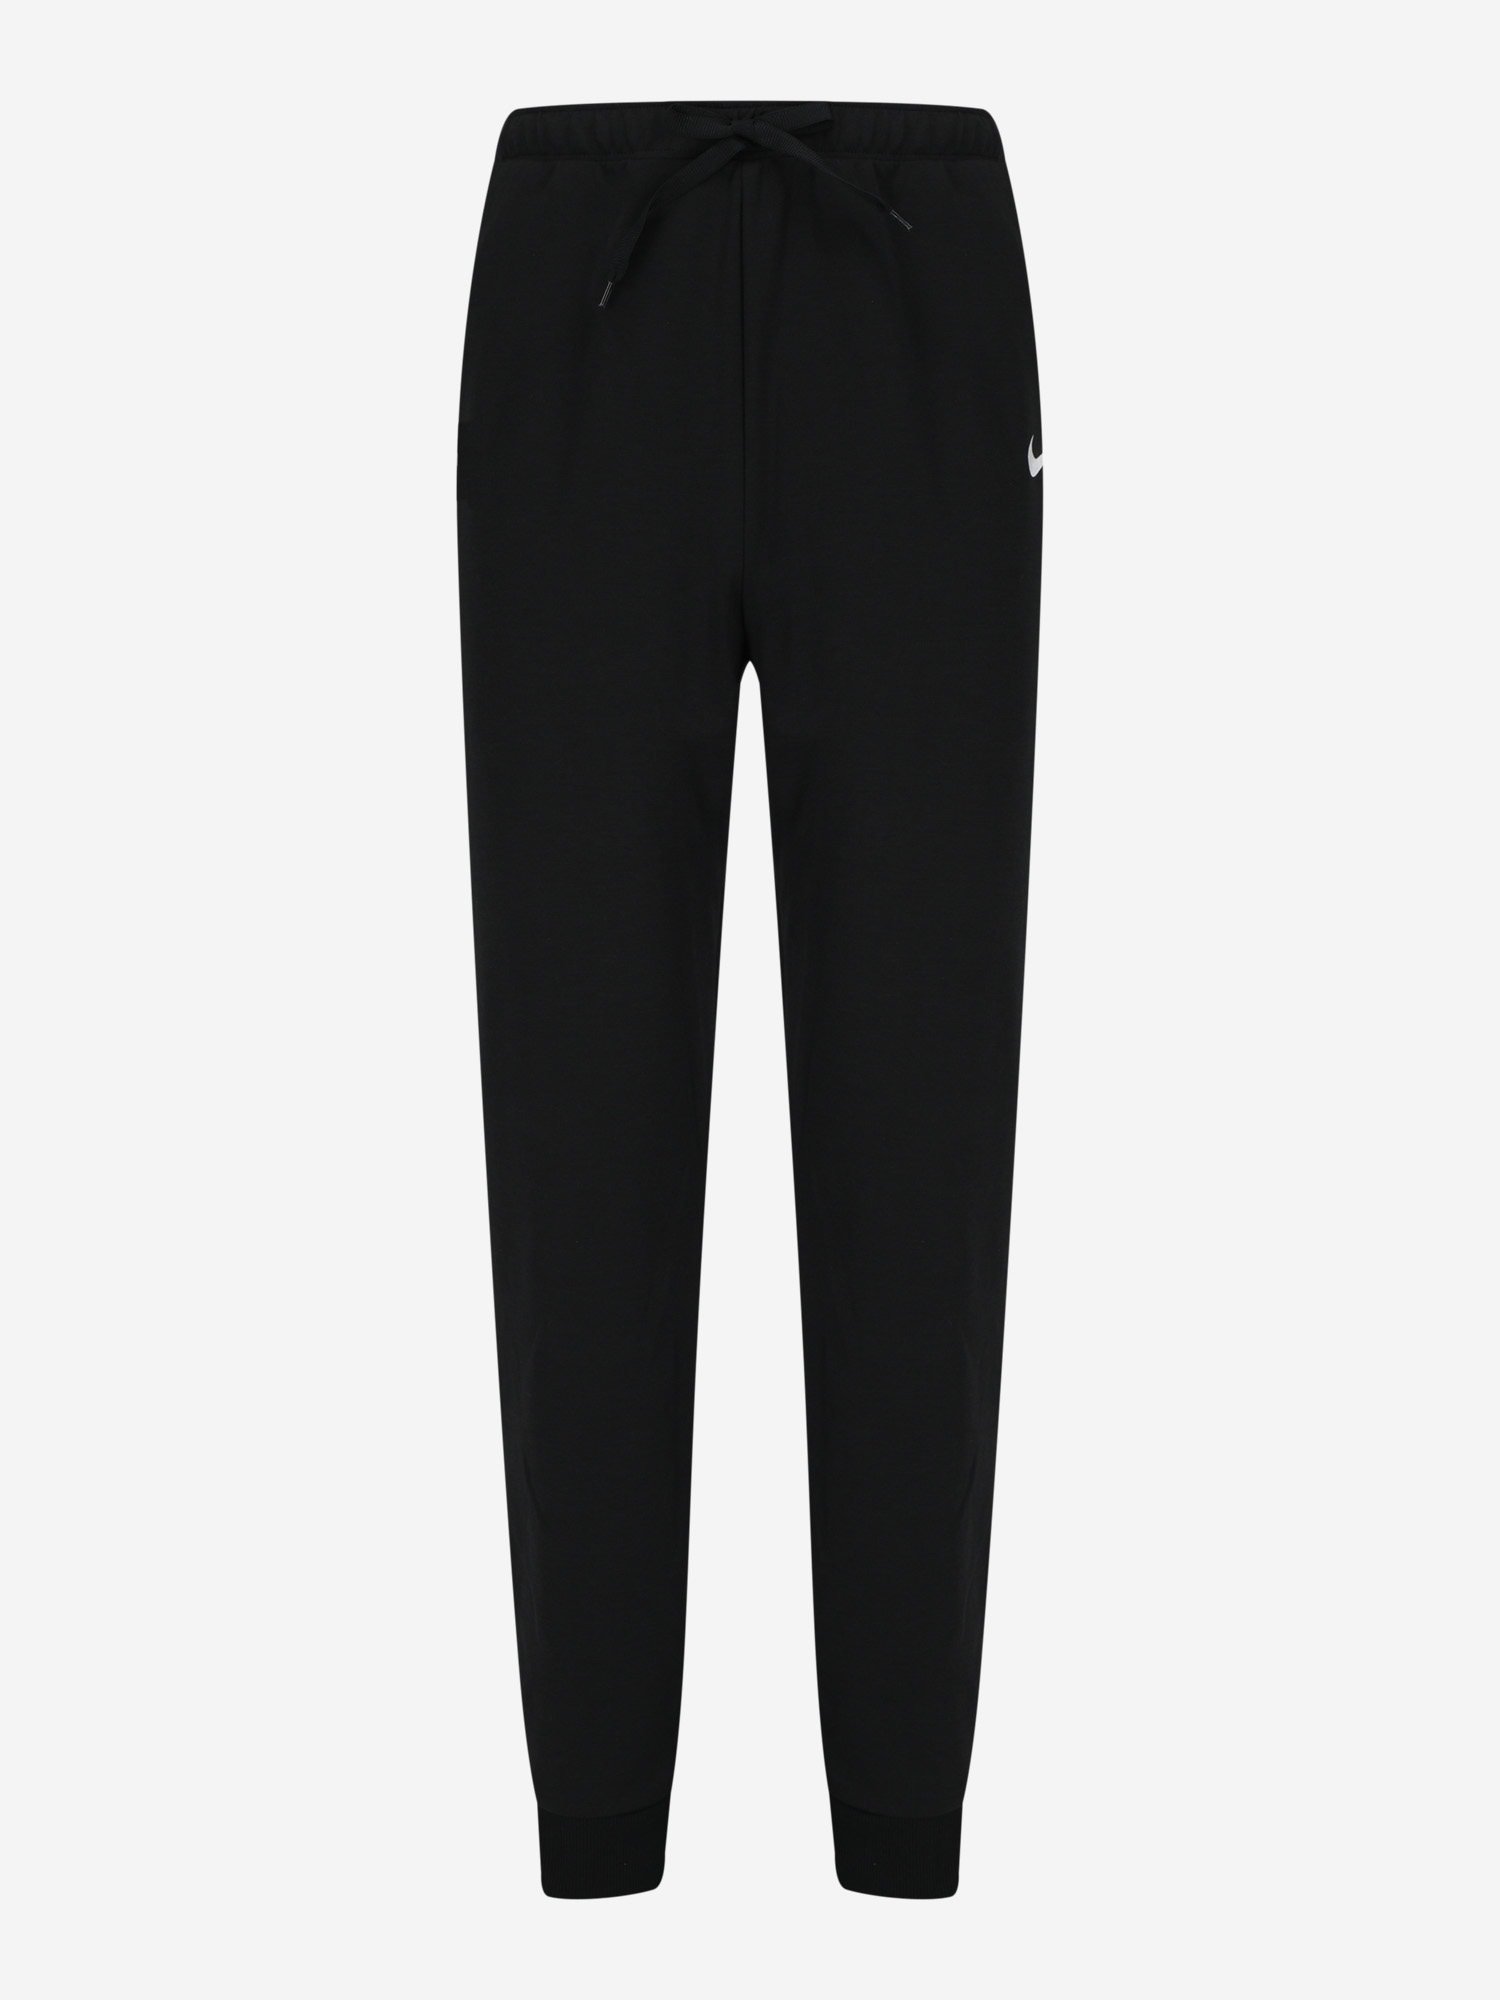 Брюки мужские Nike Training Pant Strike, Черный брюки для мальчиков nike kids training pant park 20 knit pant